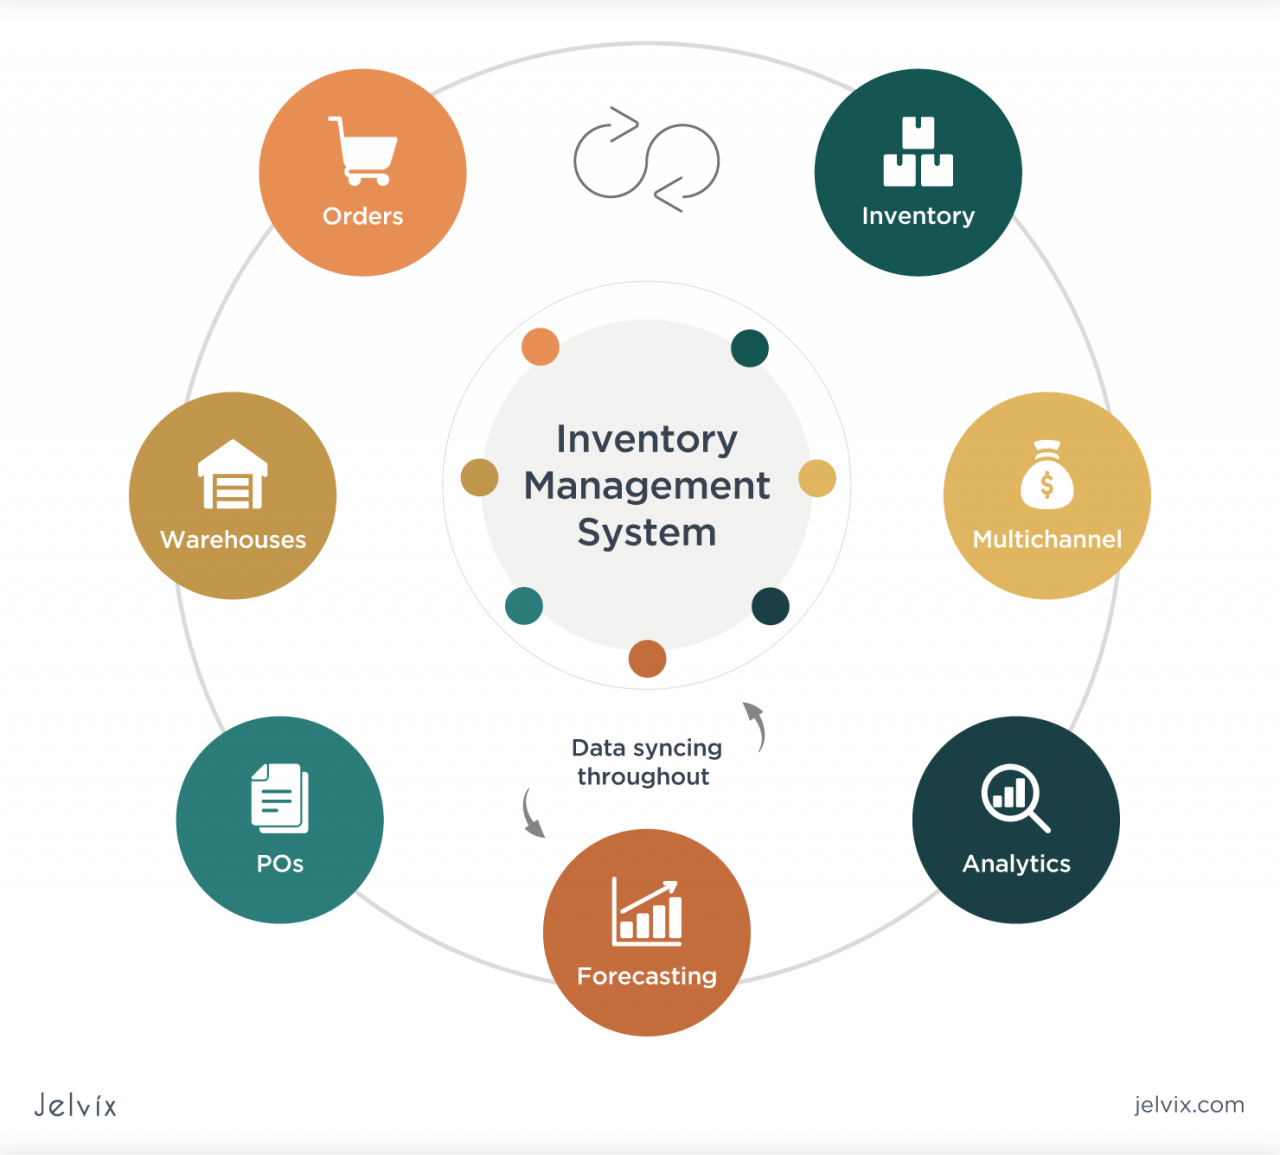 Develop an inventory management system